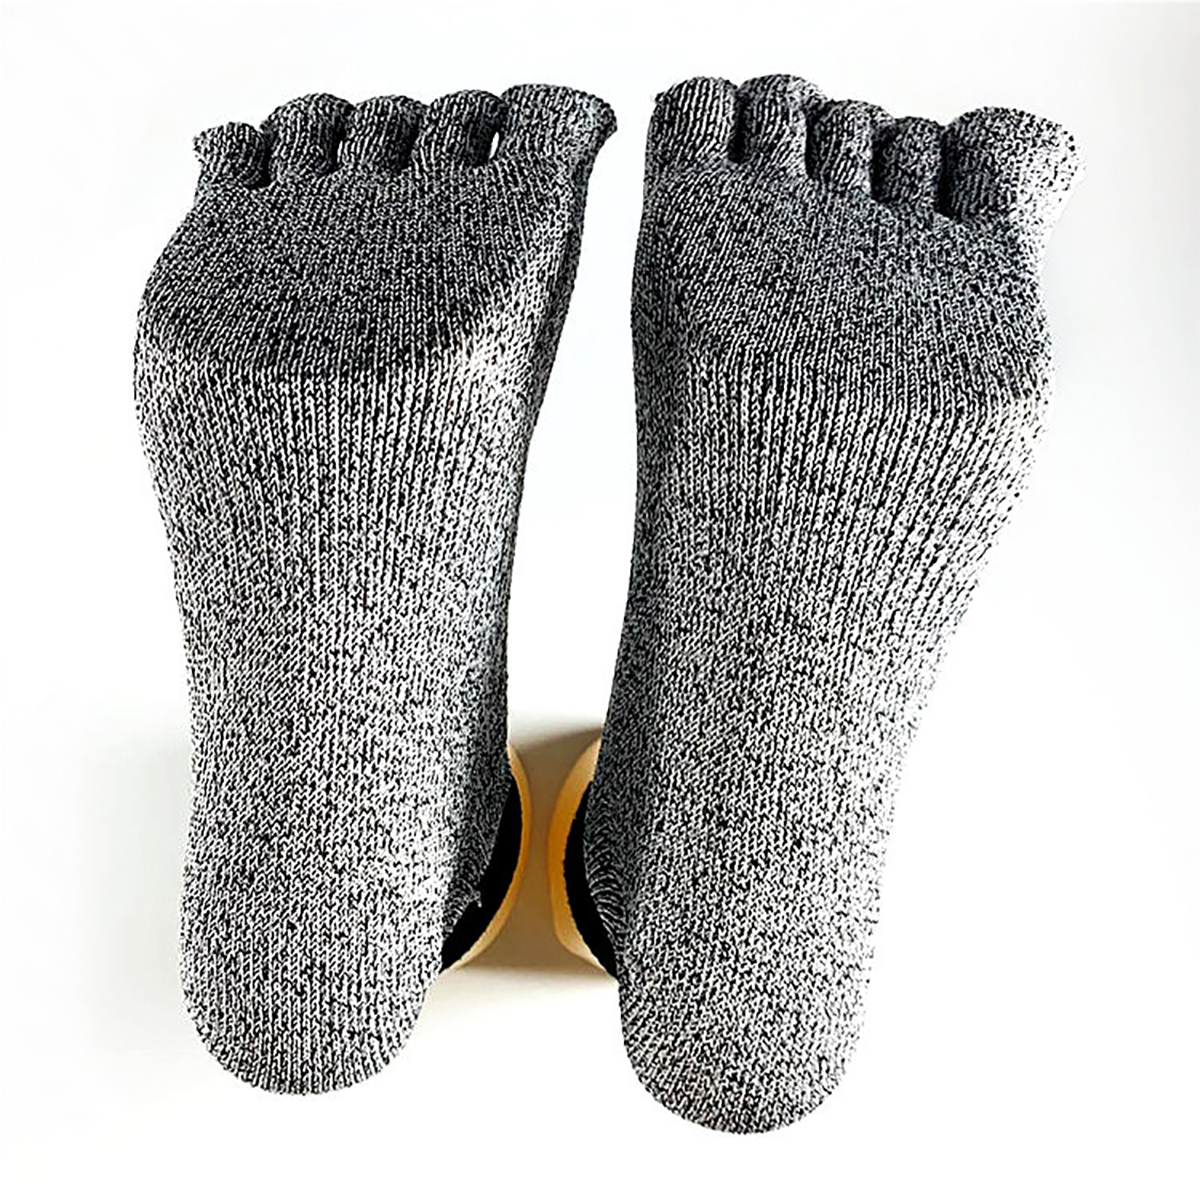 A-Pair-of-Unisex-No-Slip-Anti-Skid-Breathable-Toe-Socks-Bare-Feet-Running-Beach-HPPE-Sock-1583549-7